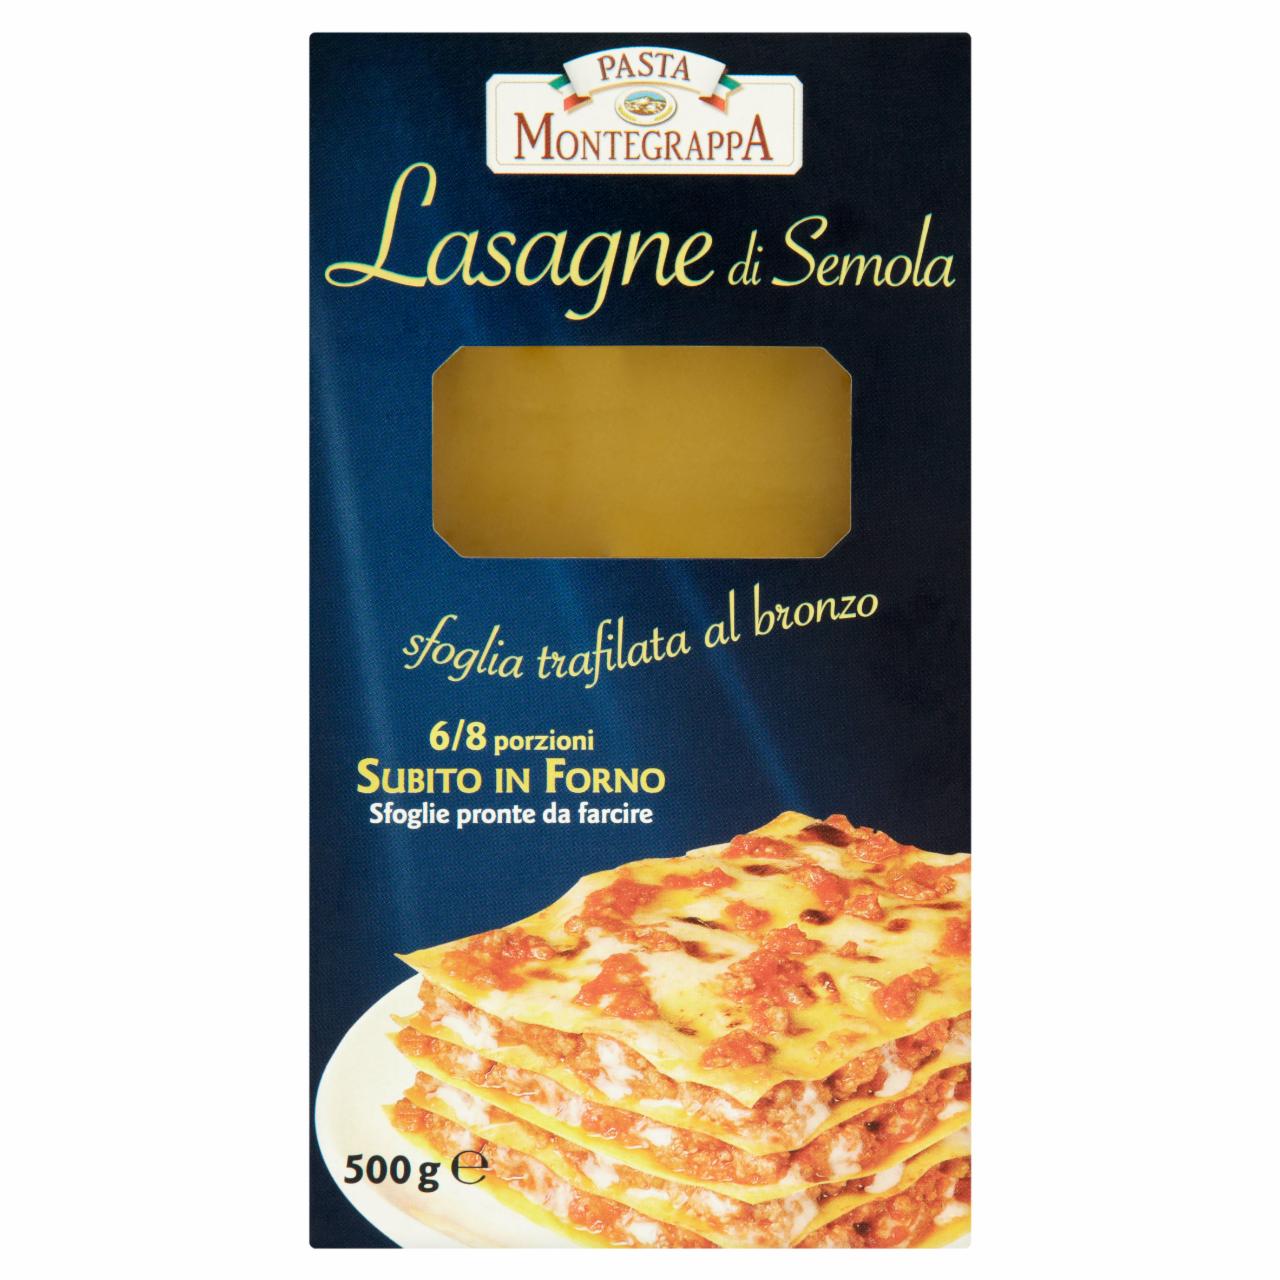 Képek - Pasta Montegrappa lasagna tészta lapok 500 g